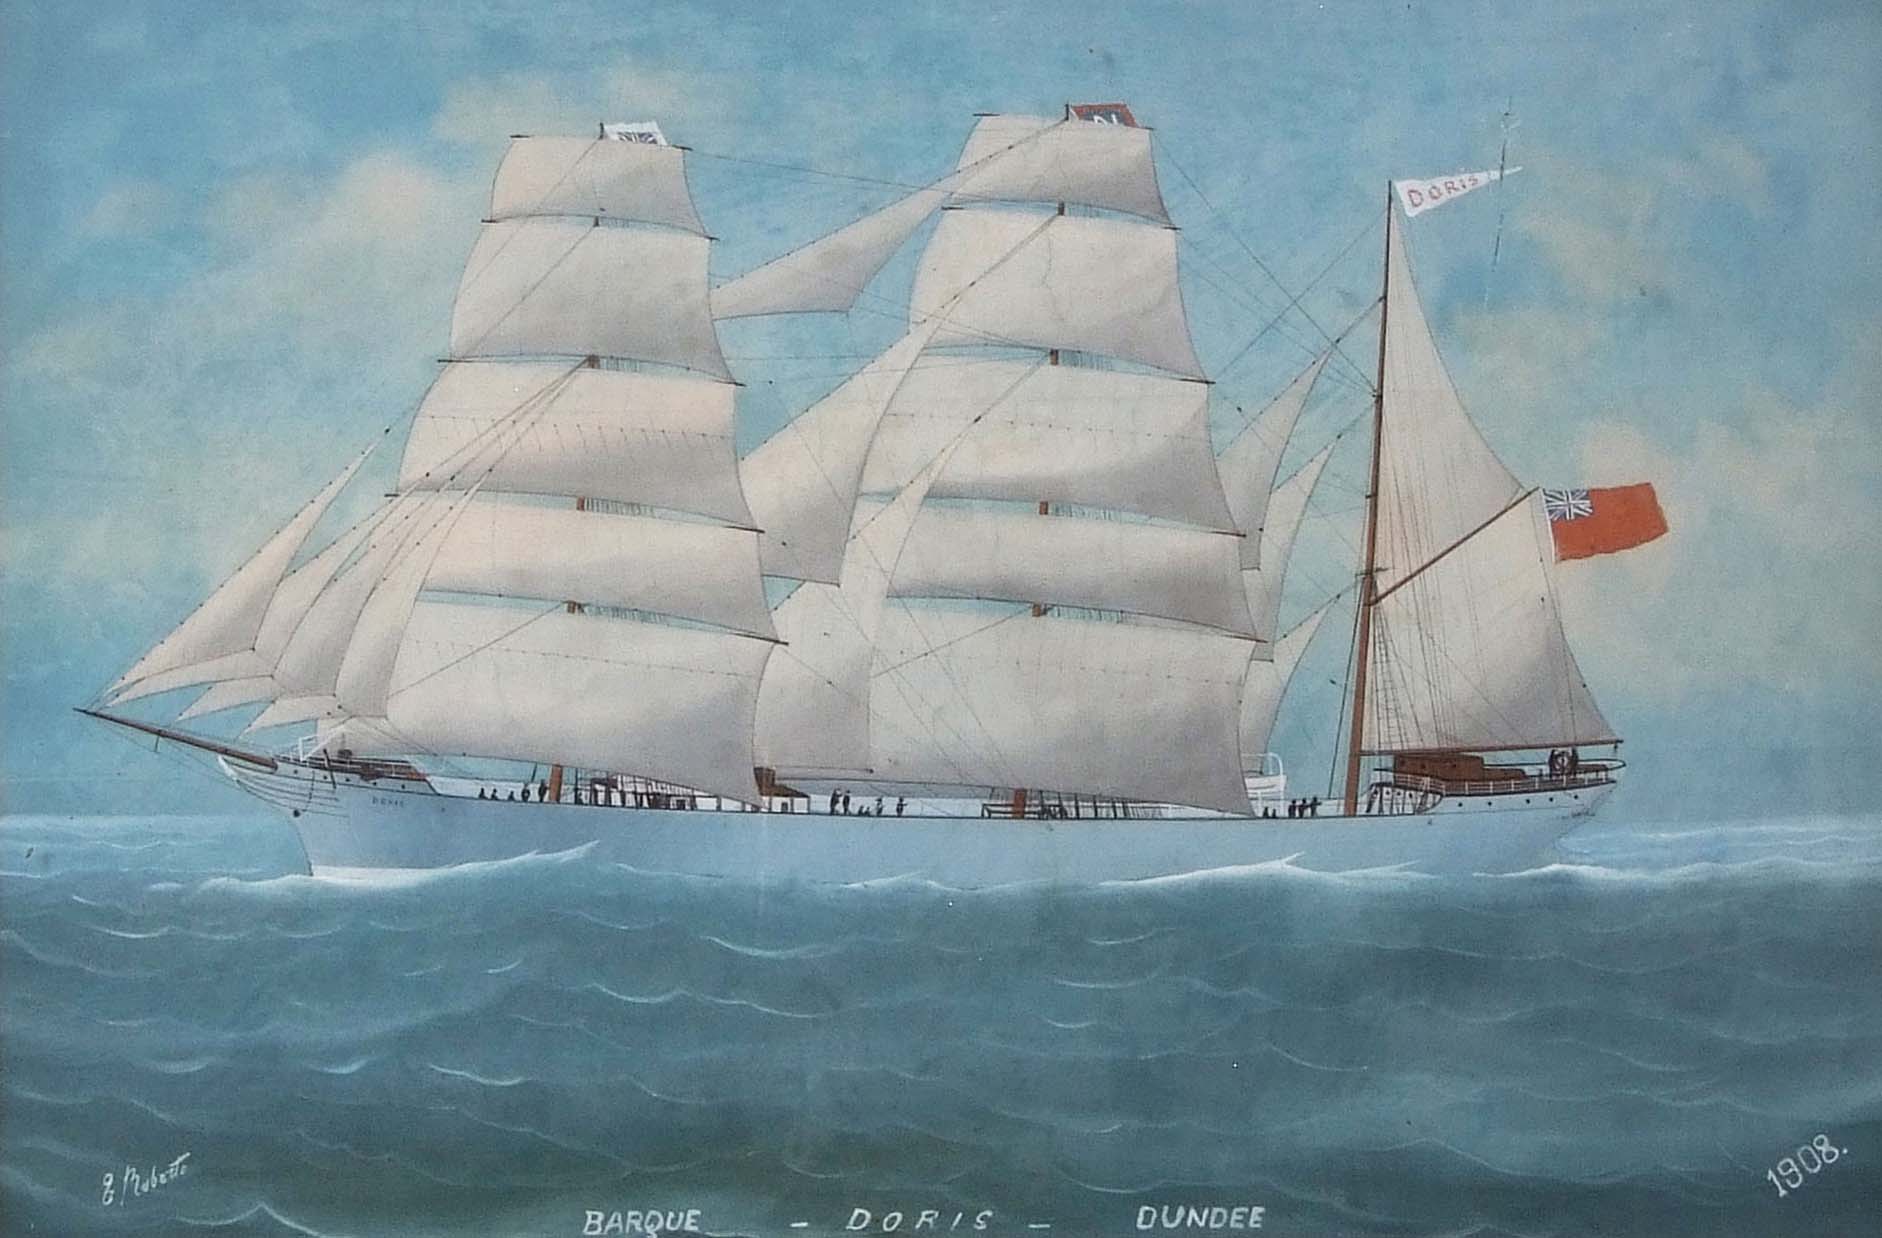 Luigi Roberto (1845-1910) "Barque - Doris - Dundee", gouache, signed lower left, dated 1908 lower